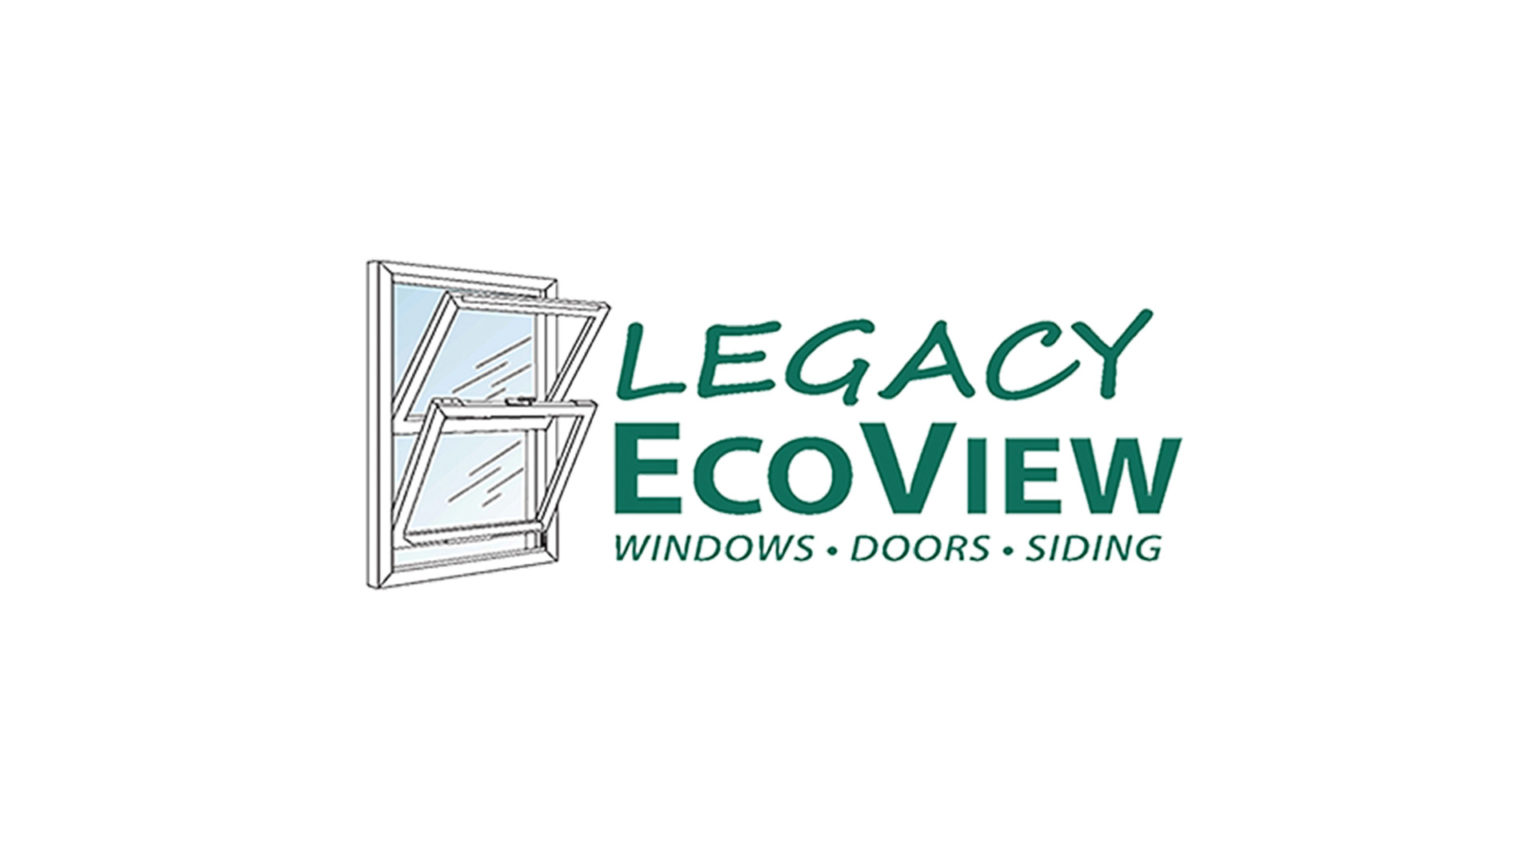 Savannah EcoView Windows - Savannah Legacy EcoView Windows